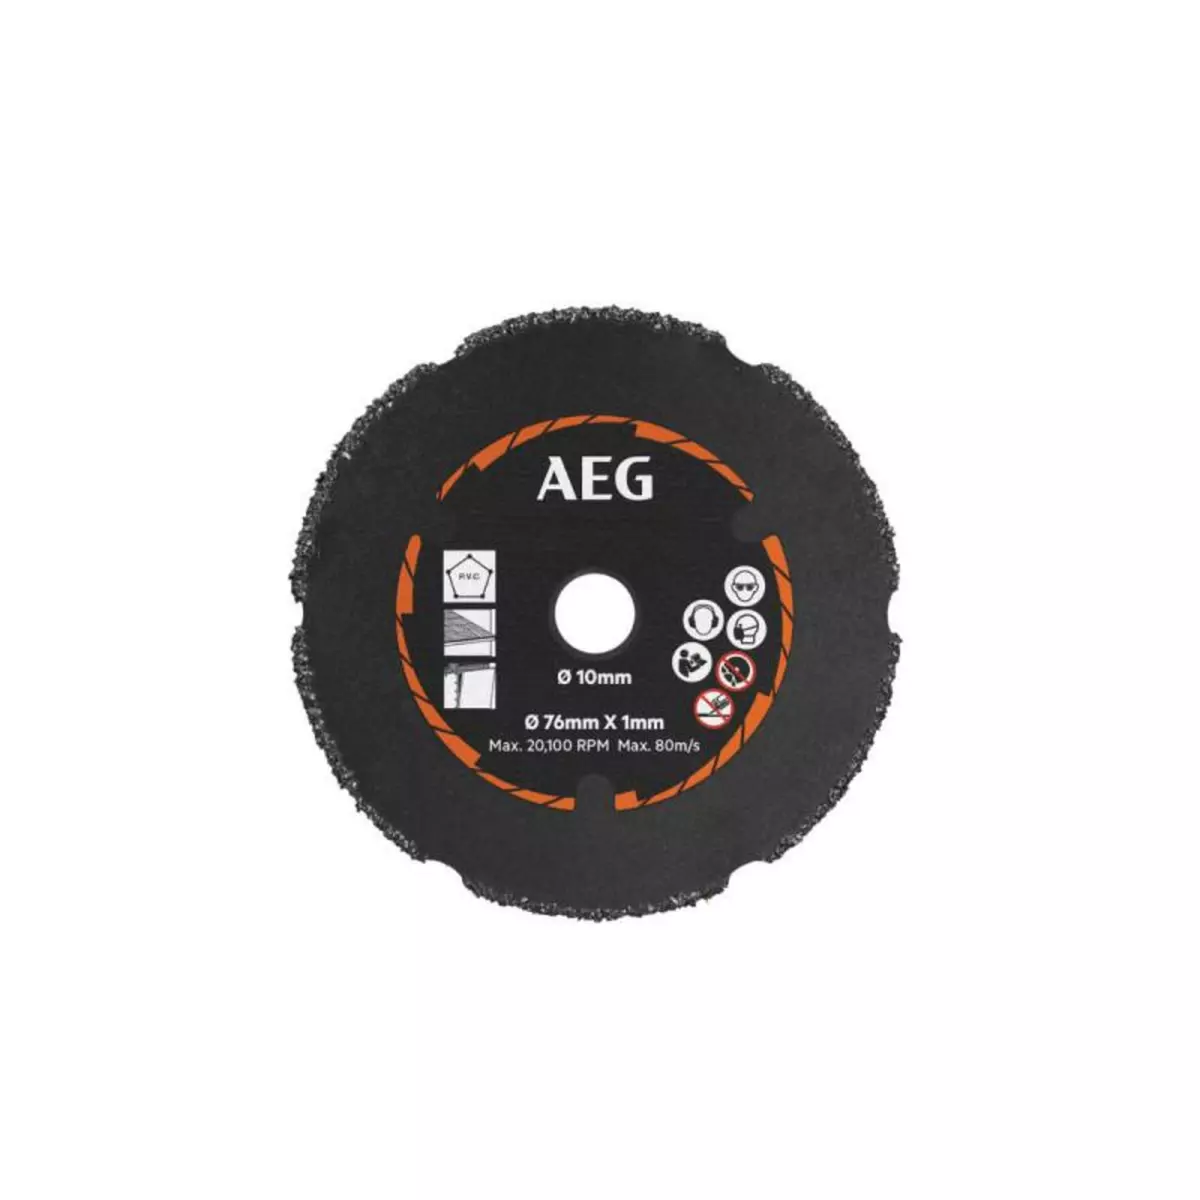 AEG Disque abrasif carbure - 76mm - AAKMMAC01